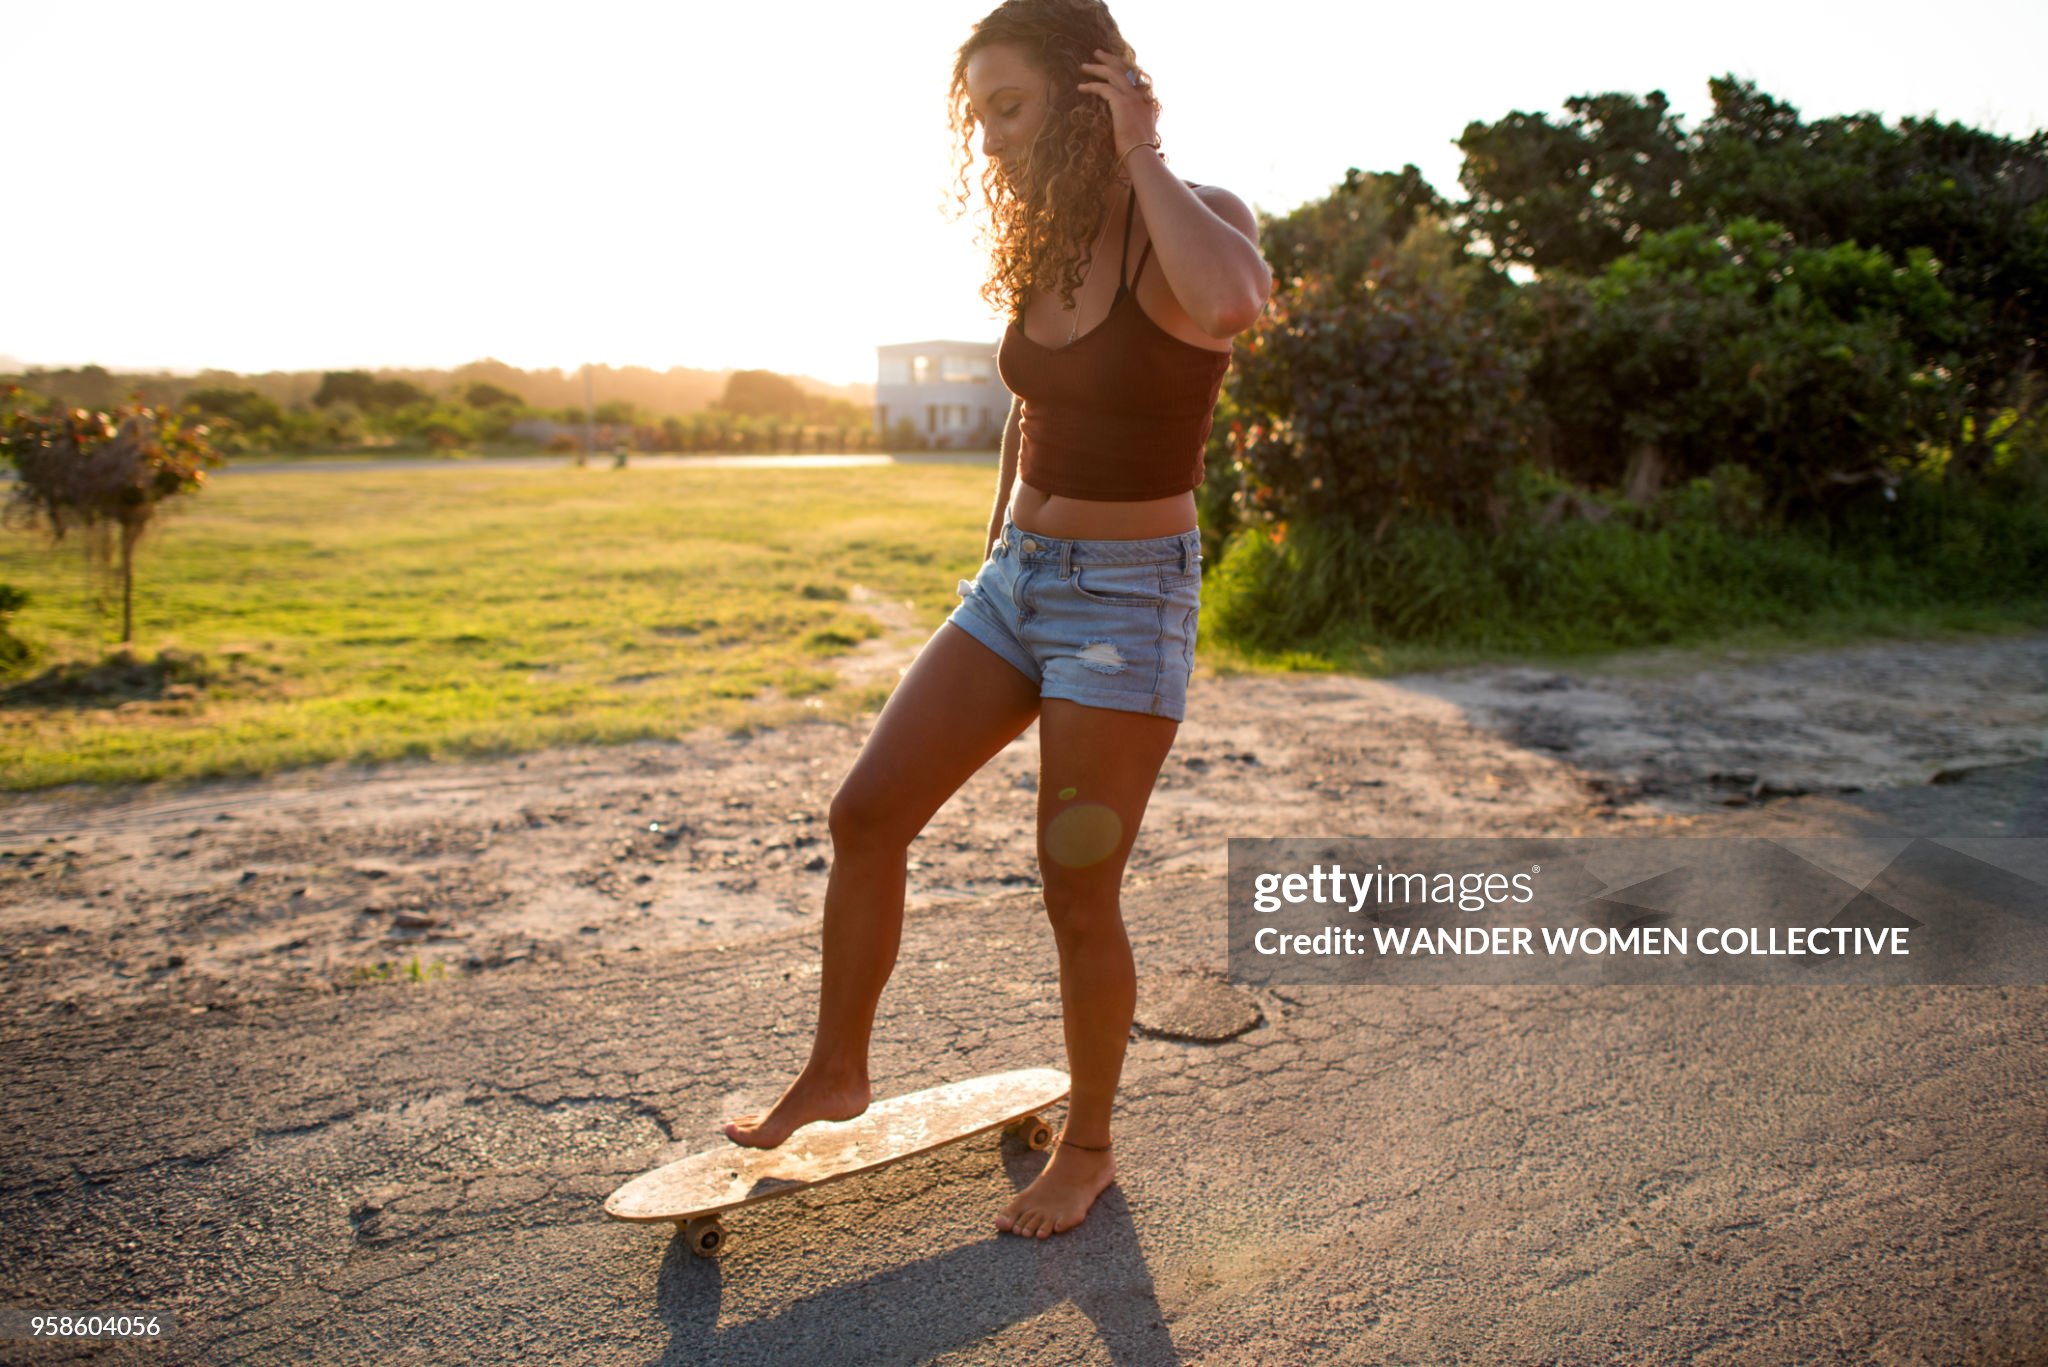 https://media.gettyimages.com/id/958604056/photo/girl-riding-skateboard-barefoot-on-the-road-at-sunset.jpg?s=2048x2048&amp;w=gi&amp;k=20&amp;c=r9O-nnqb-jbjbcI8KCqdgrqk2hQgU1VEUzM4M1YAOh8=